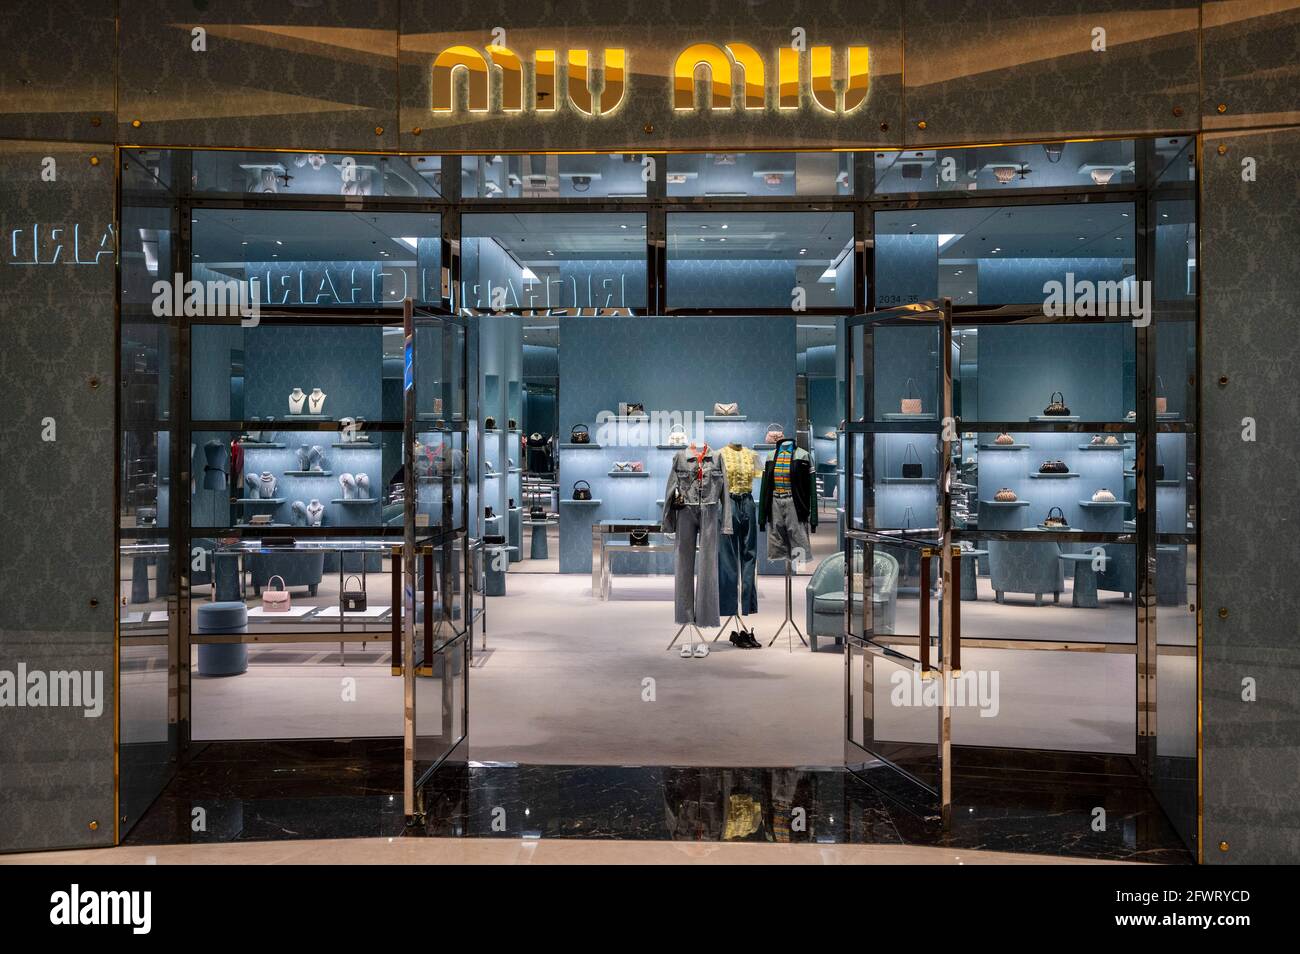 Italienische High-Fashion Damenbekleidung und Accessoires Marke Miu Miu  Store in Hongkong Stockfotografie - Alamy